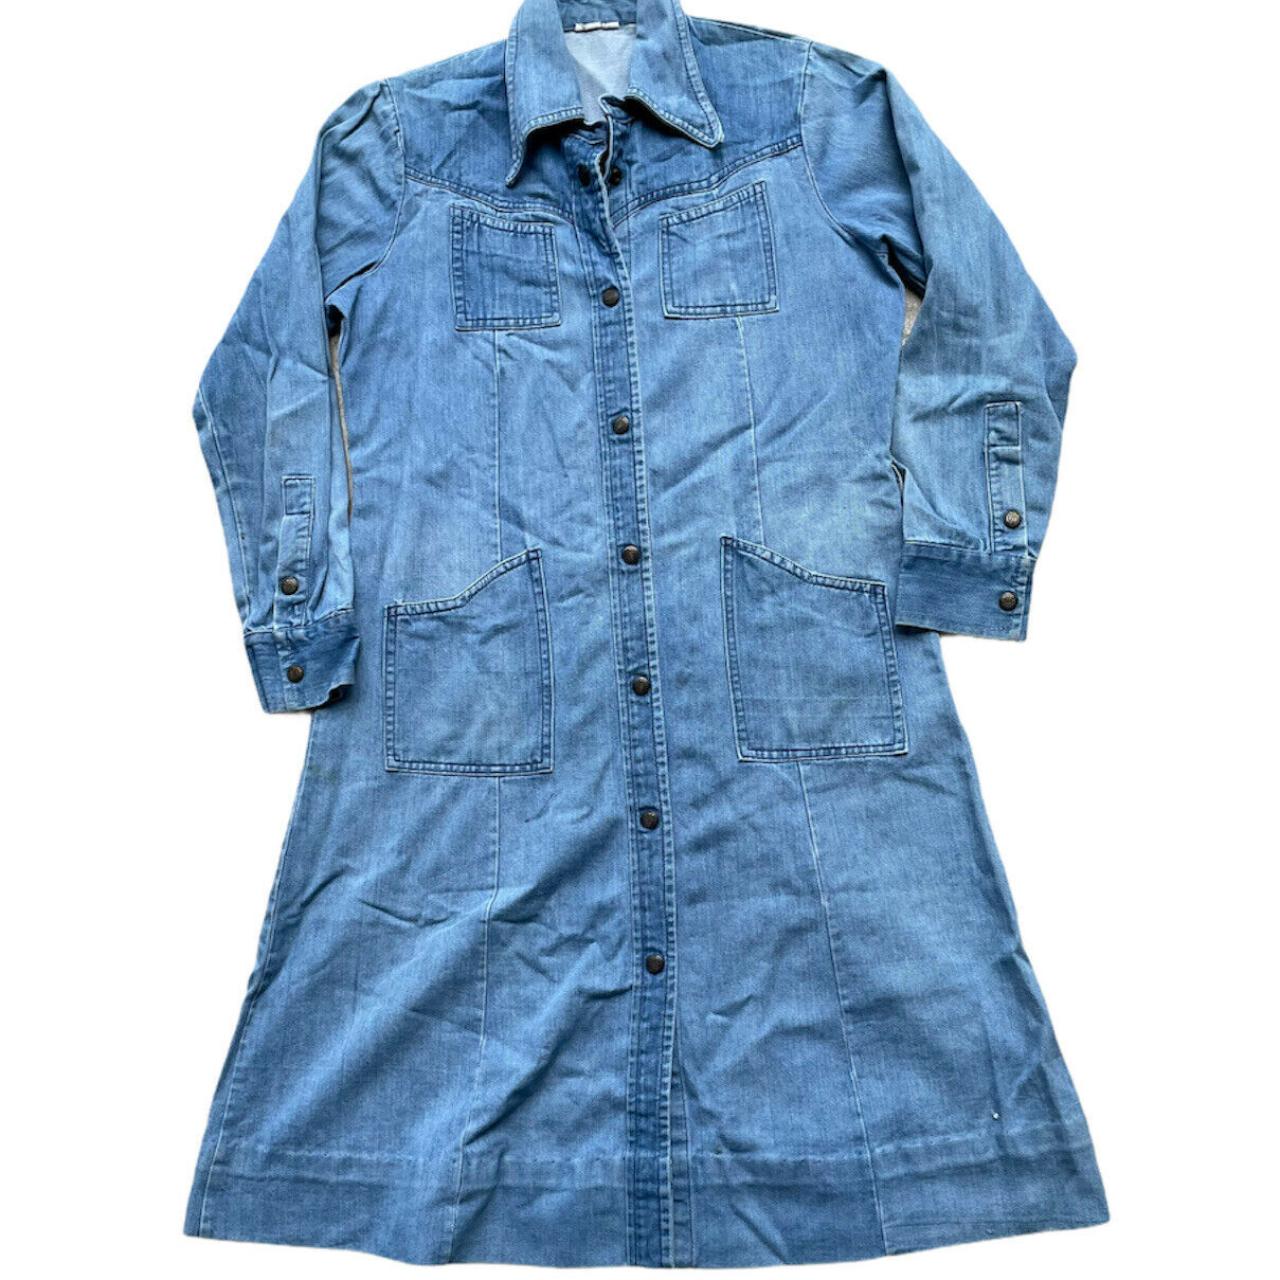 90s Denim Dress Vintage Military-inspired Blue Denim Dress Minimalist  Avantgarde Streetstyle Hero Jeans Dress. - Etsy